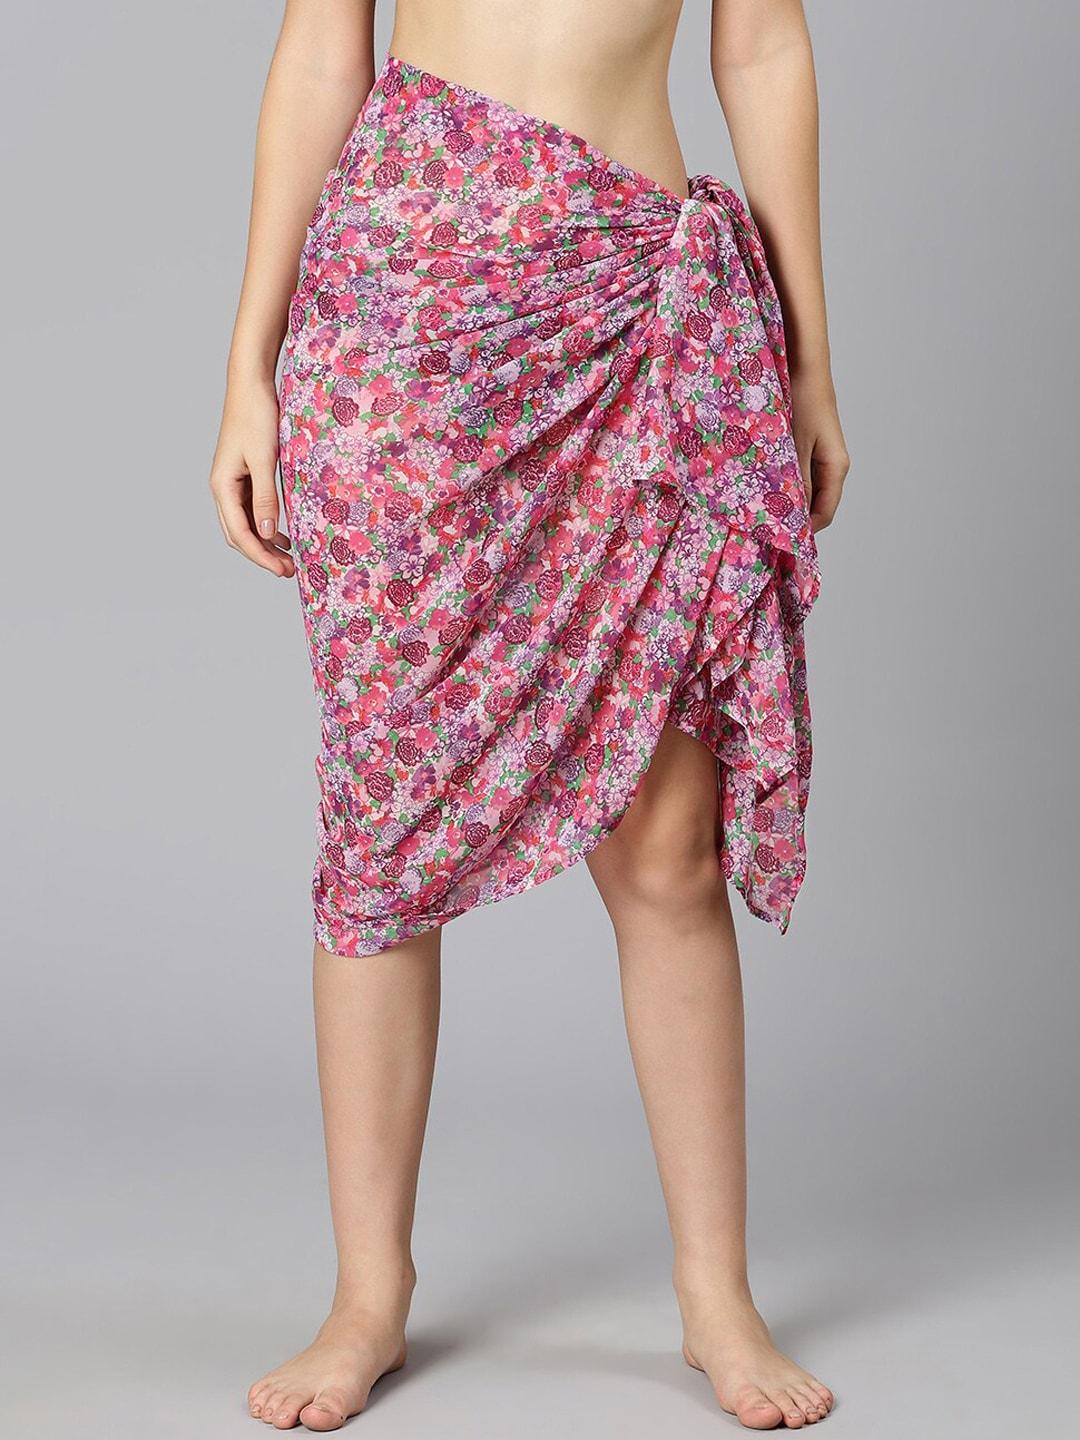 oxolloxo women floral printed sarong